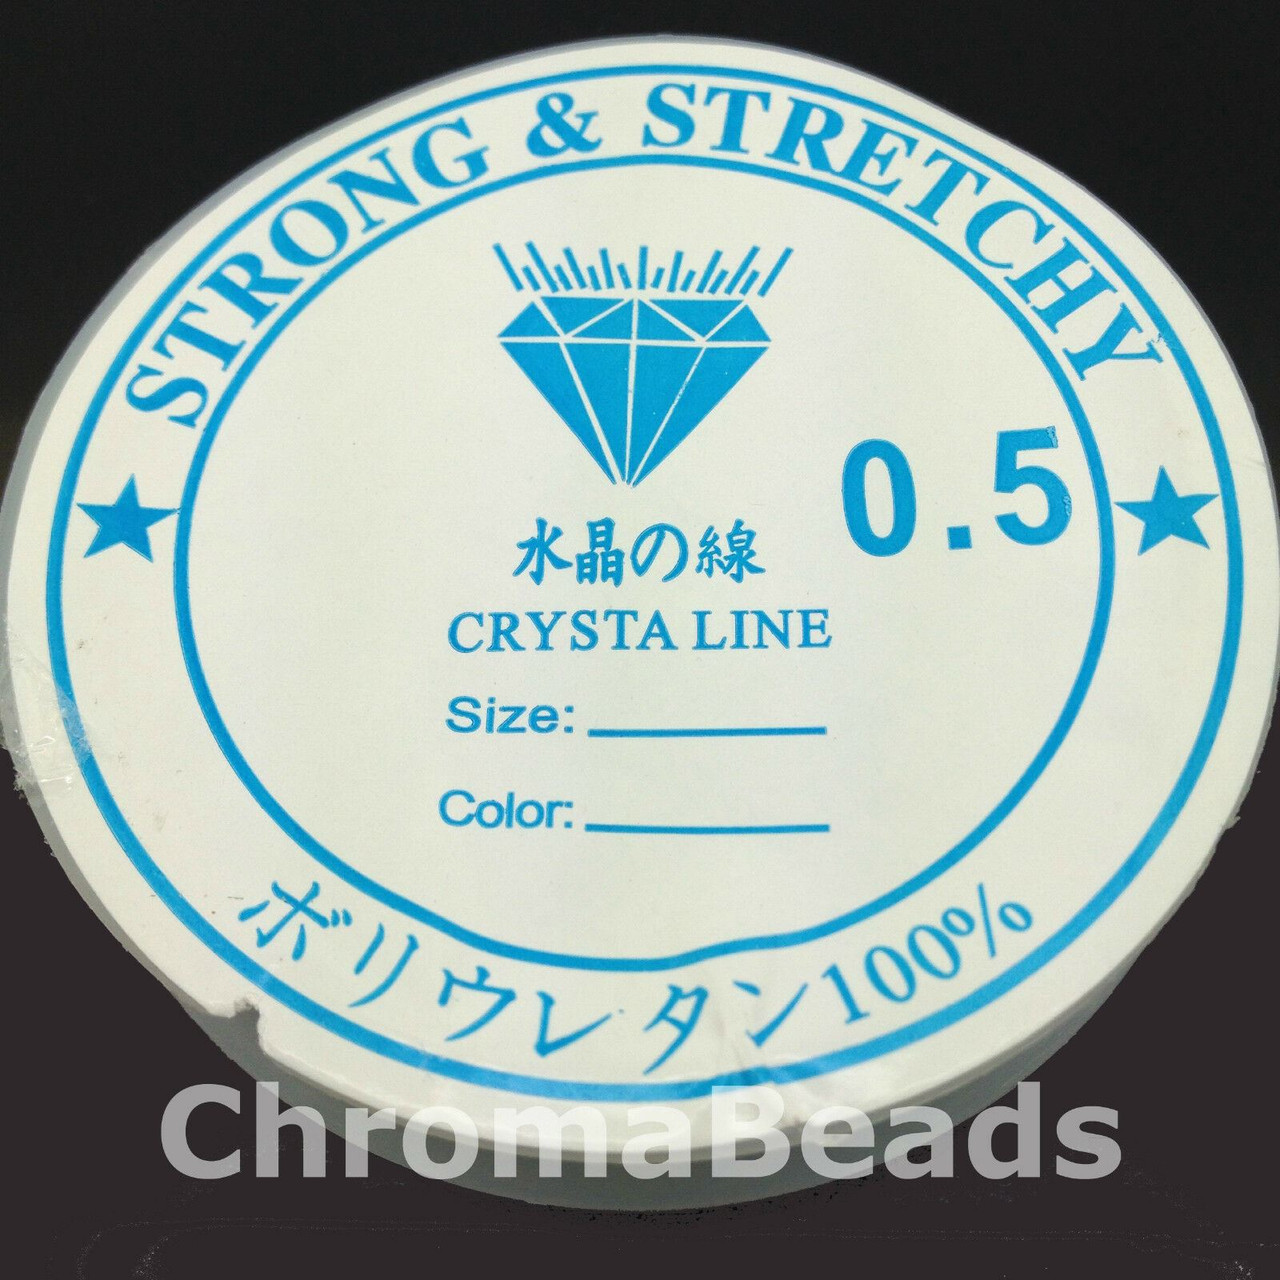 0.5mm Strong & Stretchy crystal elastic thread, 10m roll - clear